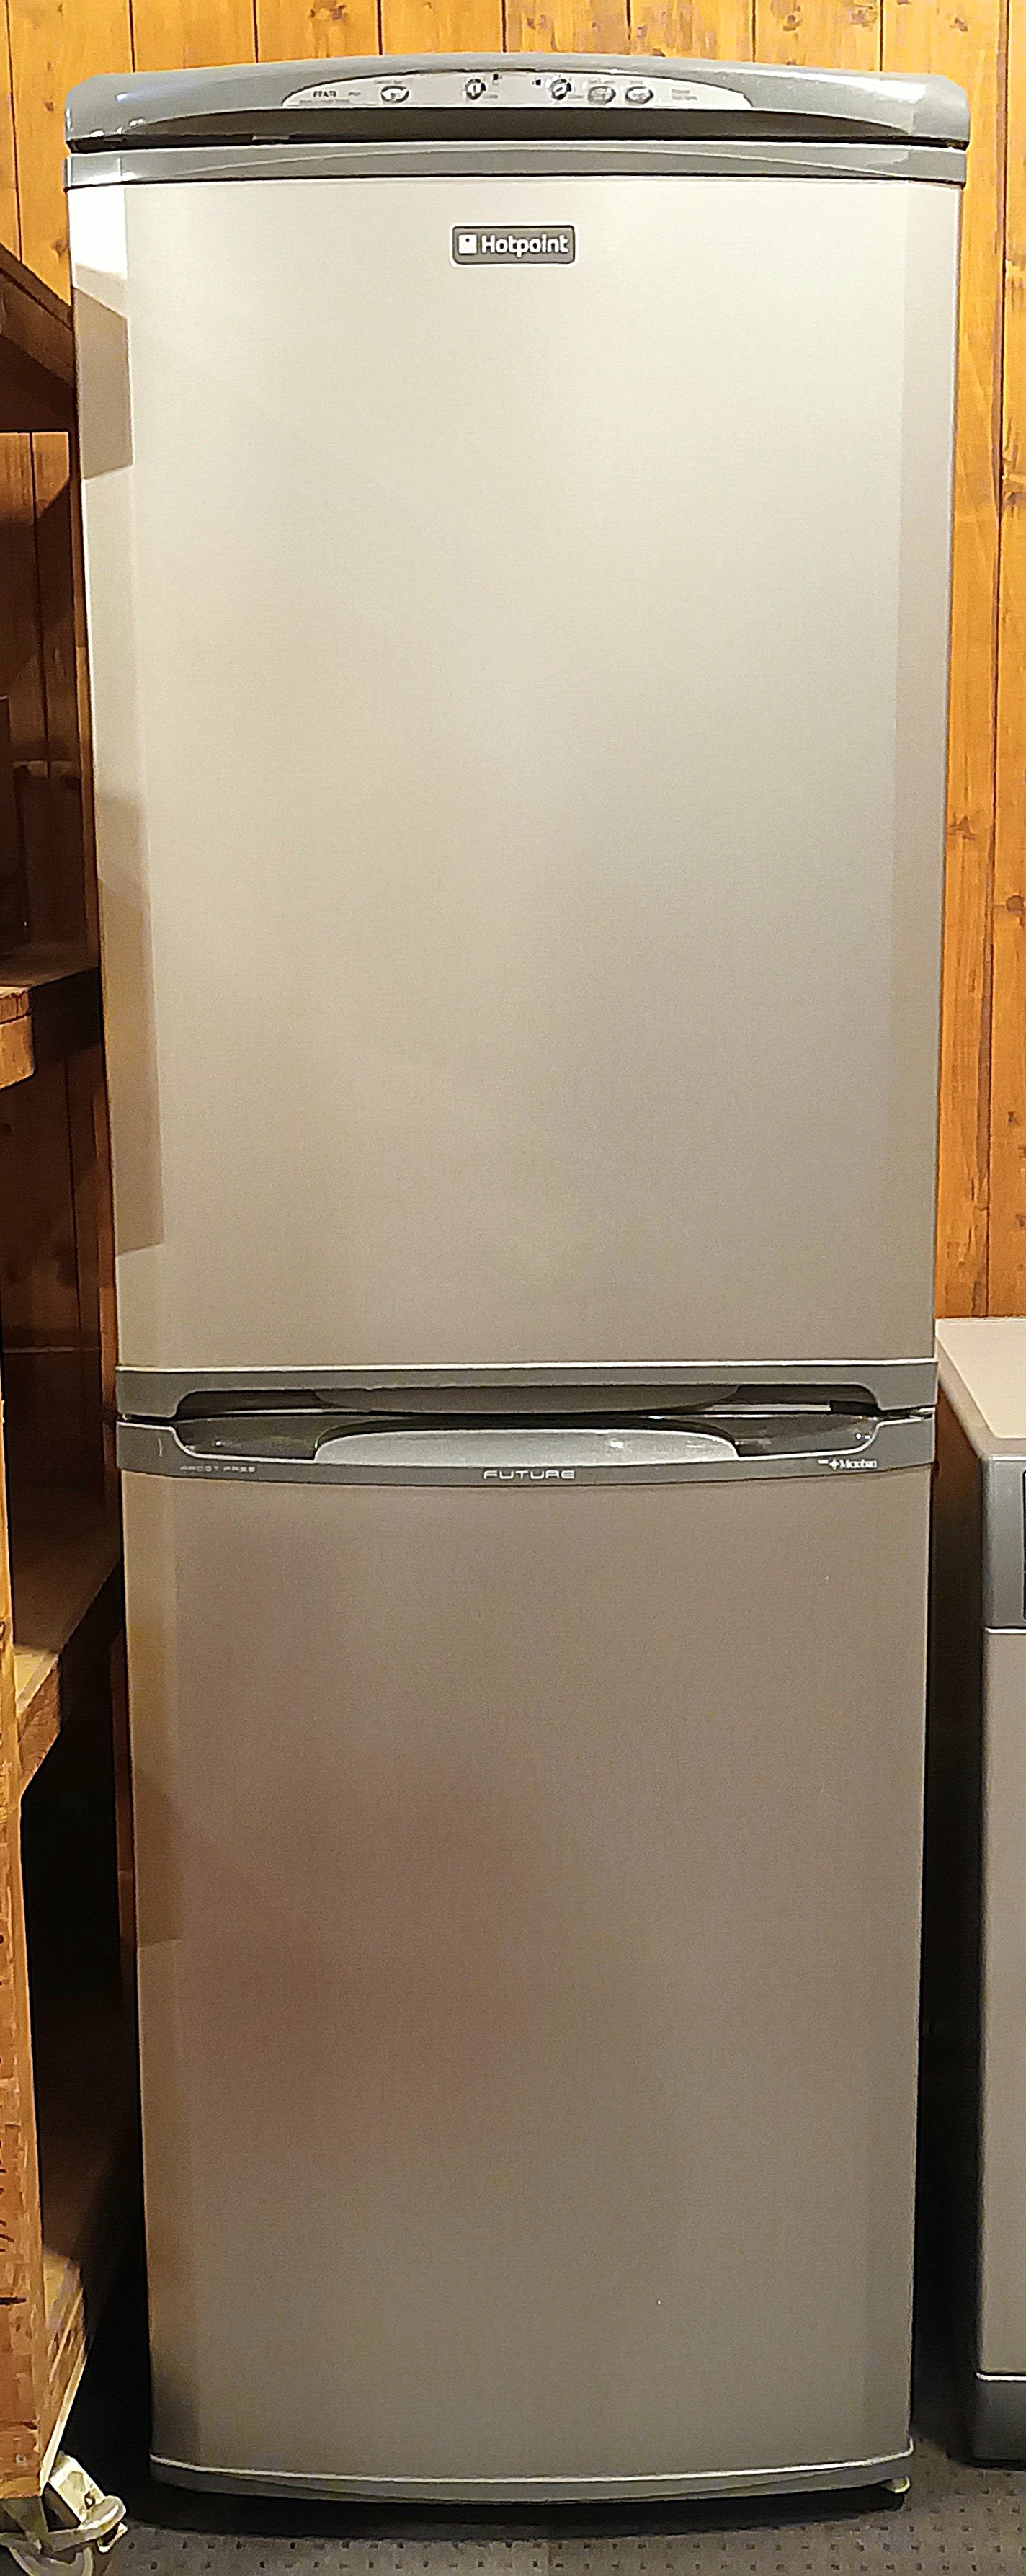 A Hotpoint 'Future' fridge/freezer, model number FFA74 H180, W60, D60cm.